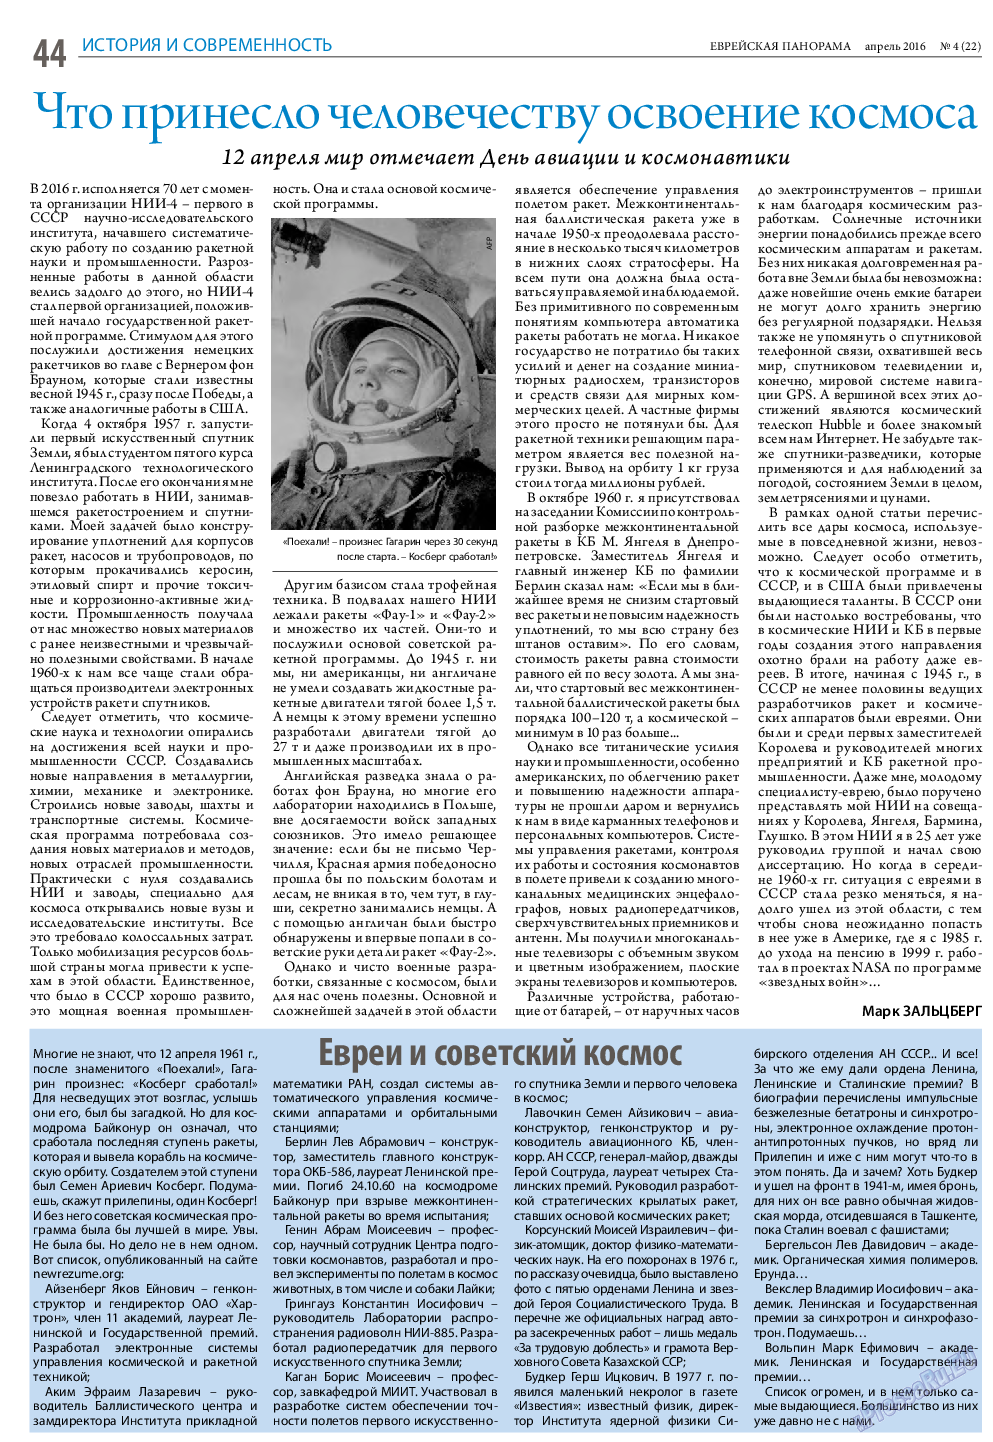 Еврейская панорама, газета. 2016 №4 стр.44